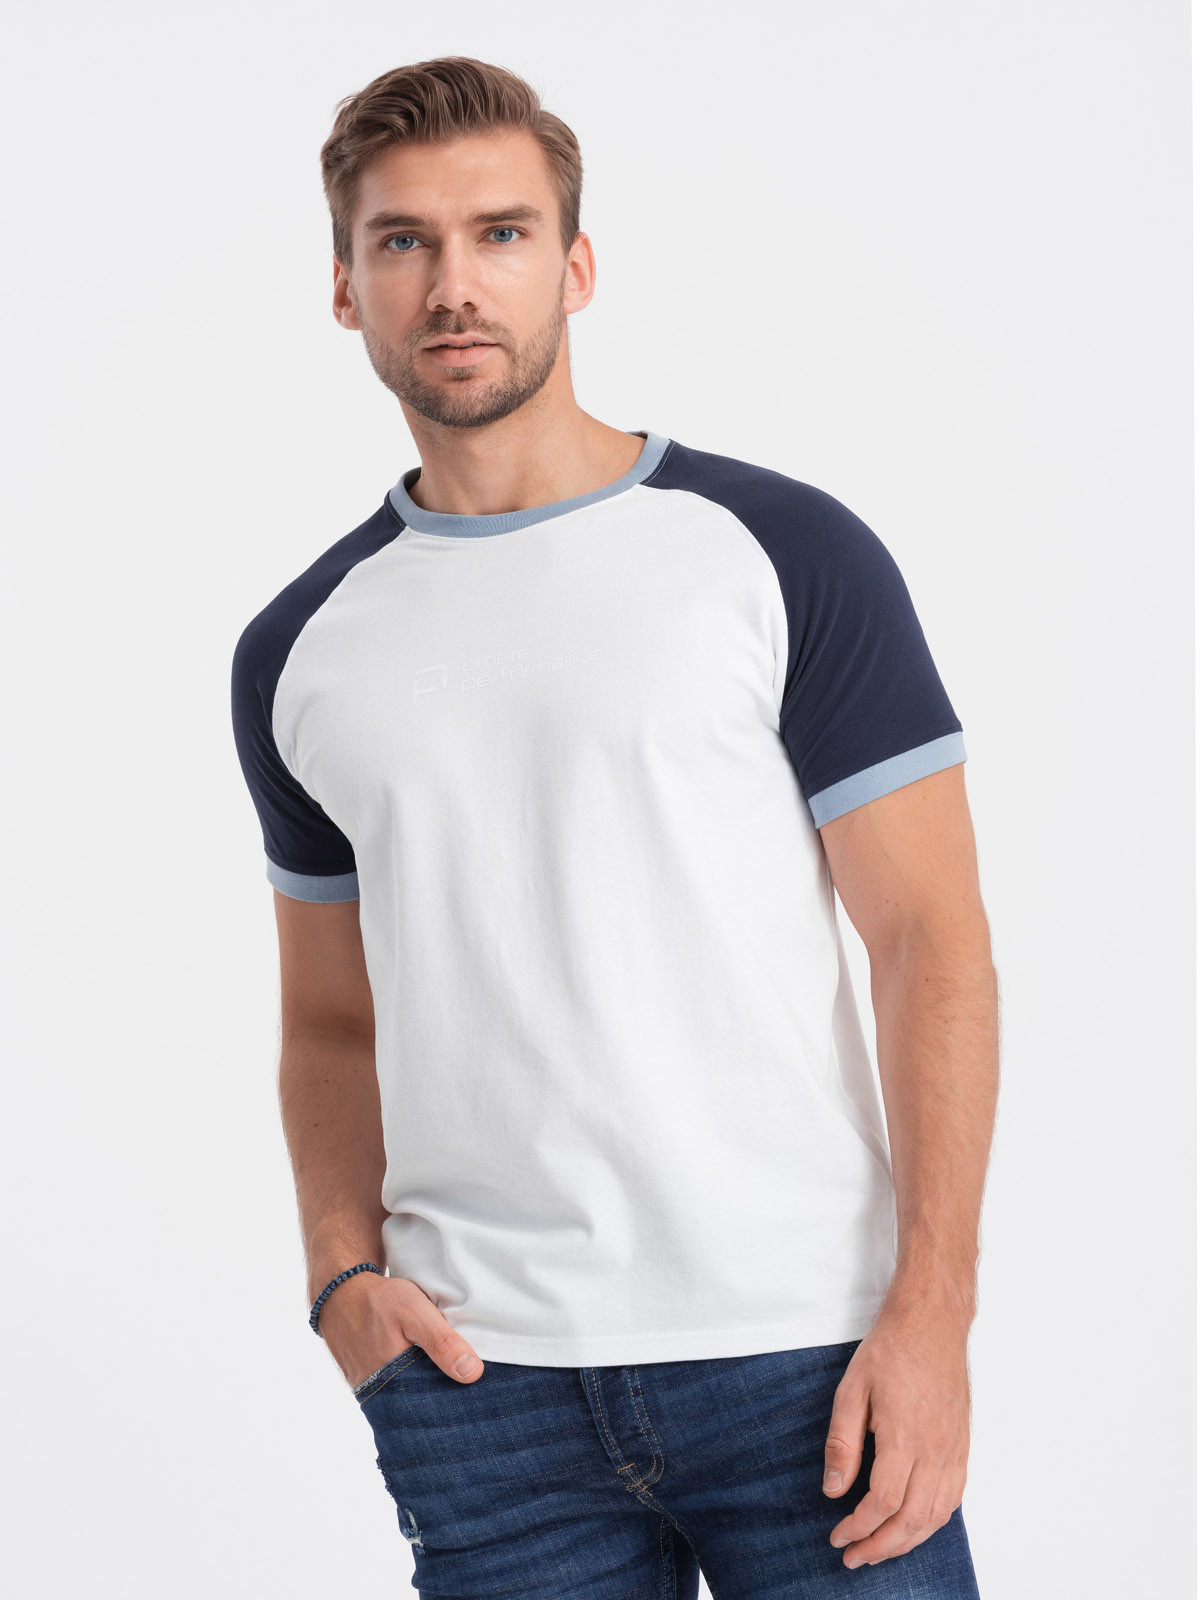 Men's cotton reglan t-shirt V6 S1623